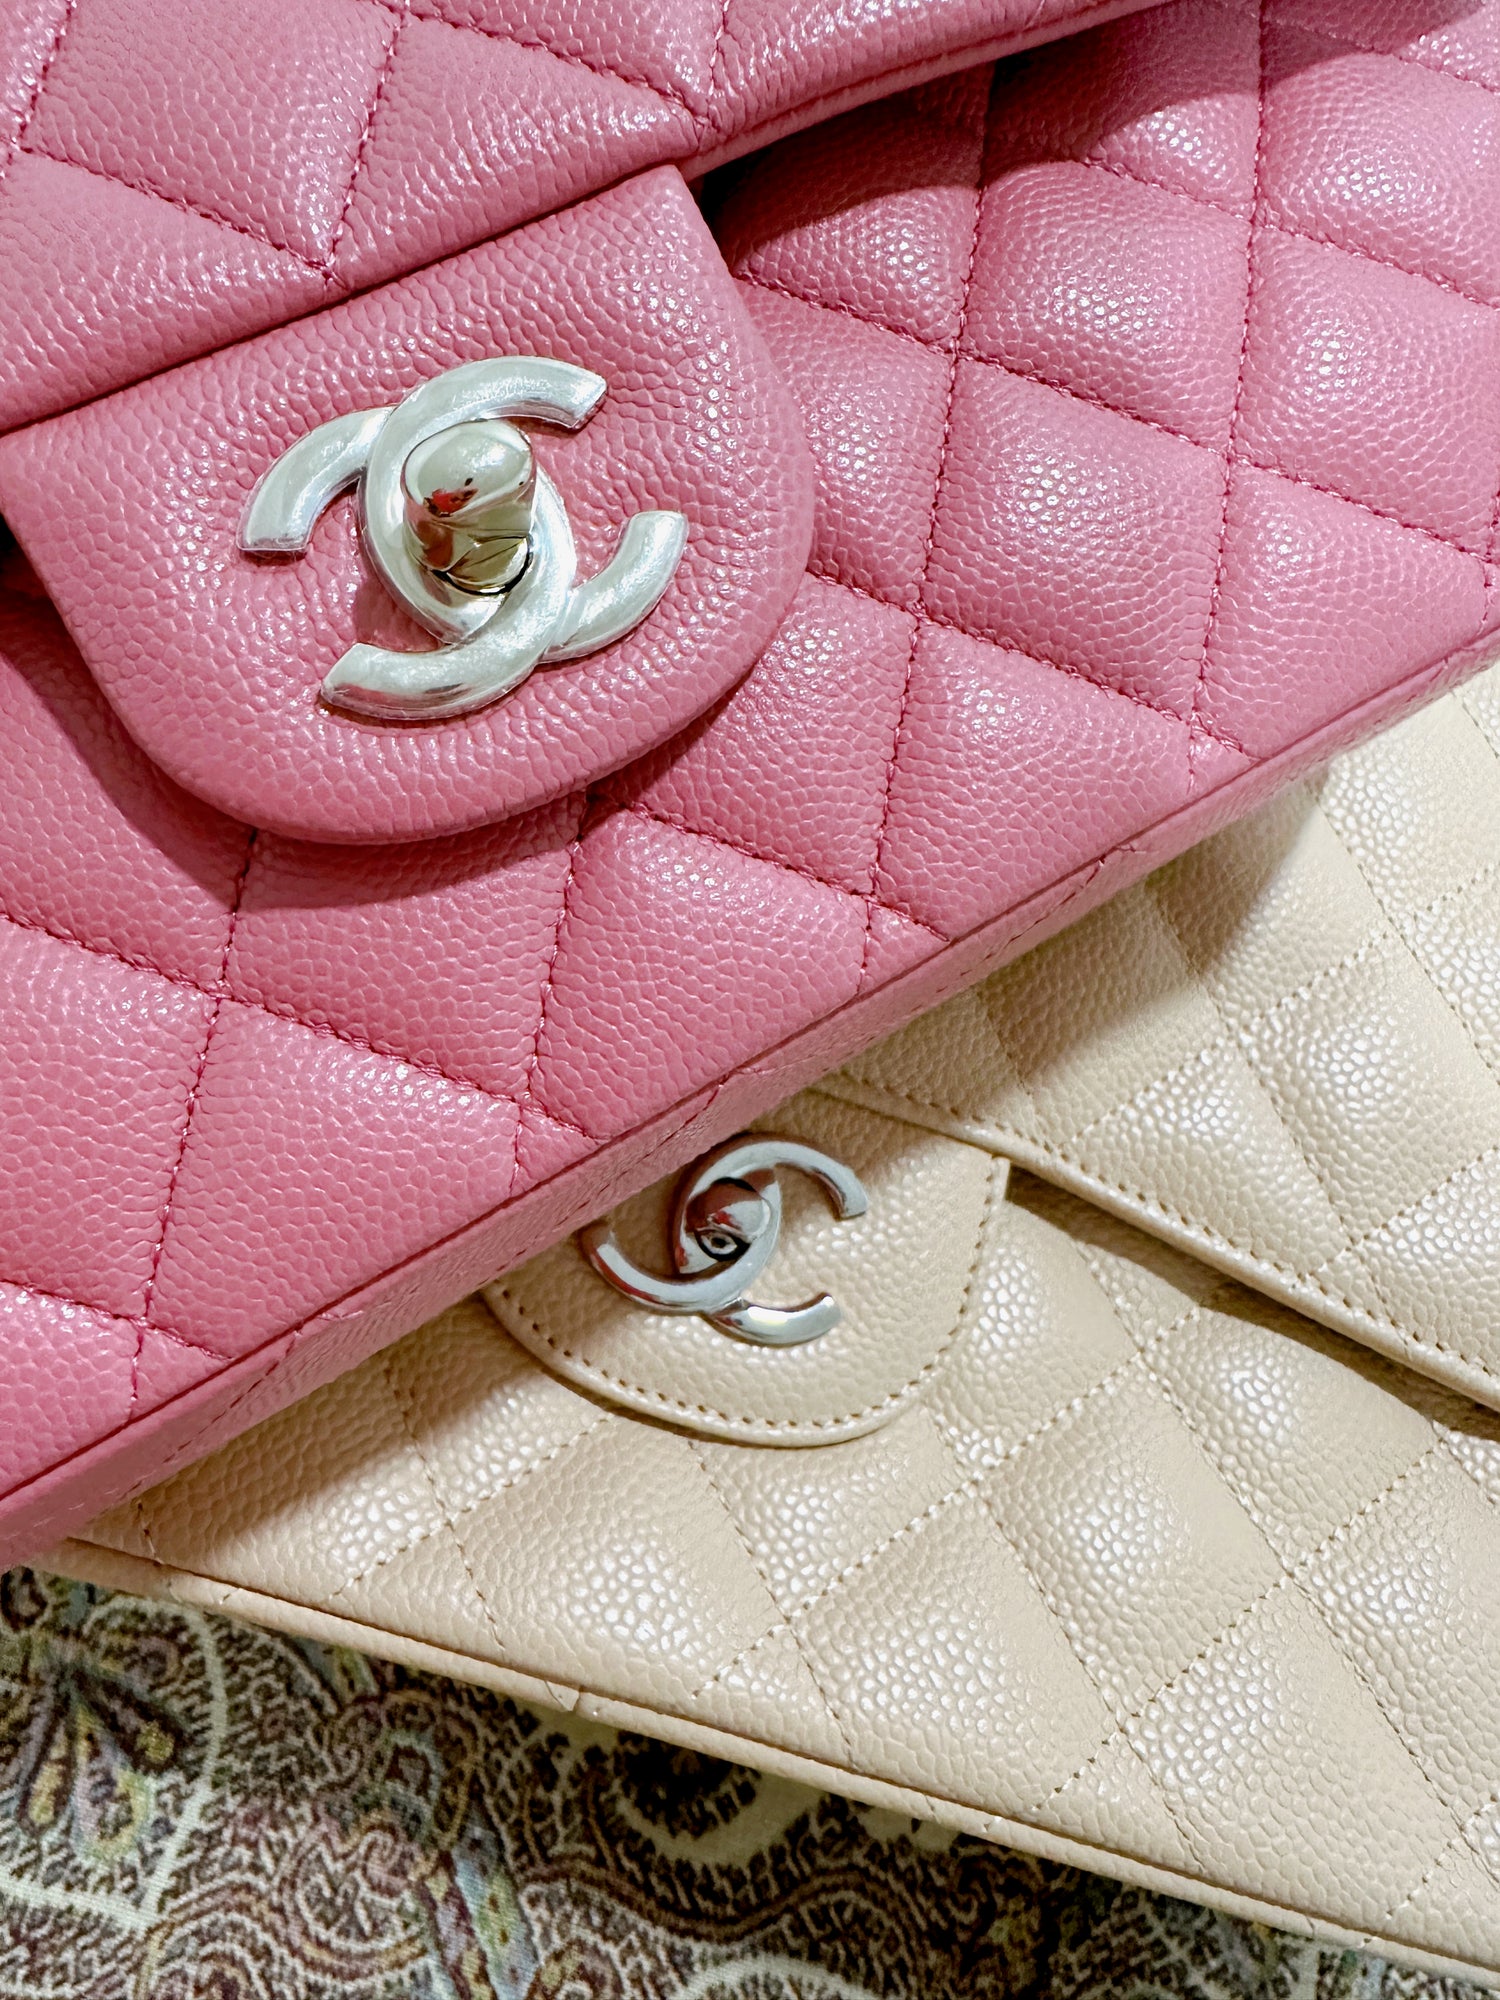 Fendi Tan Leather 2 Way Crossbody Bag – The Don's Luxury Goods